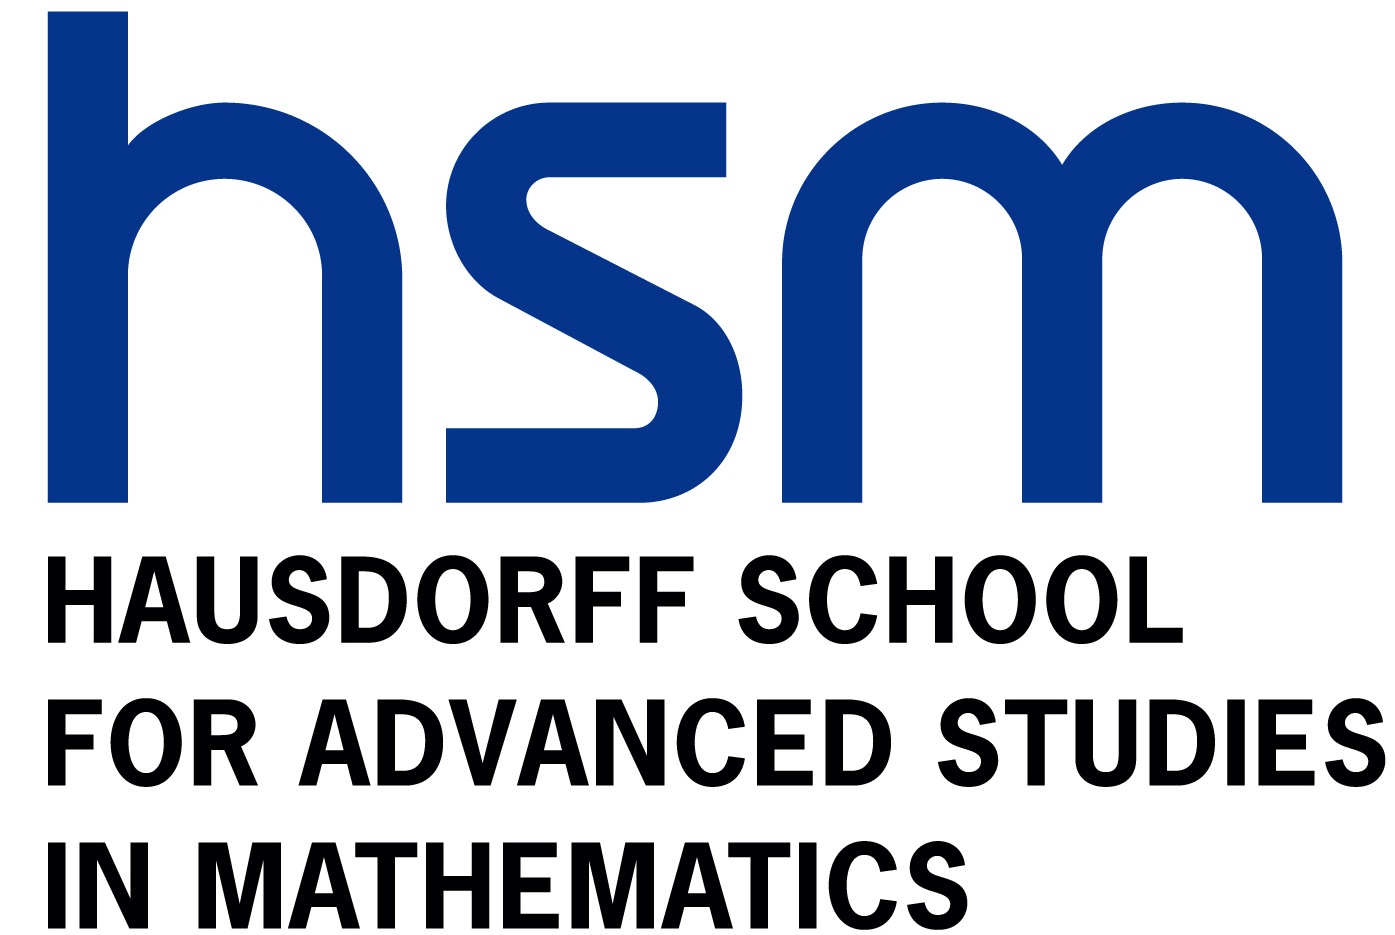 Hausdorff School for Advanced Studies in Mathematics